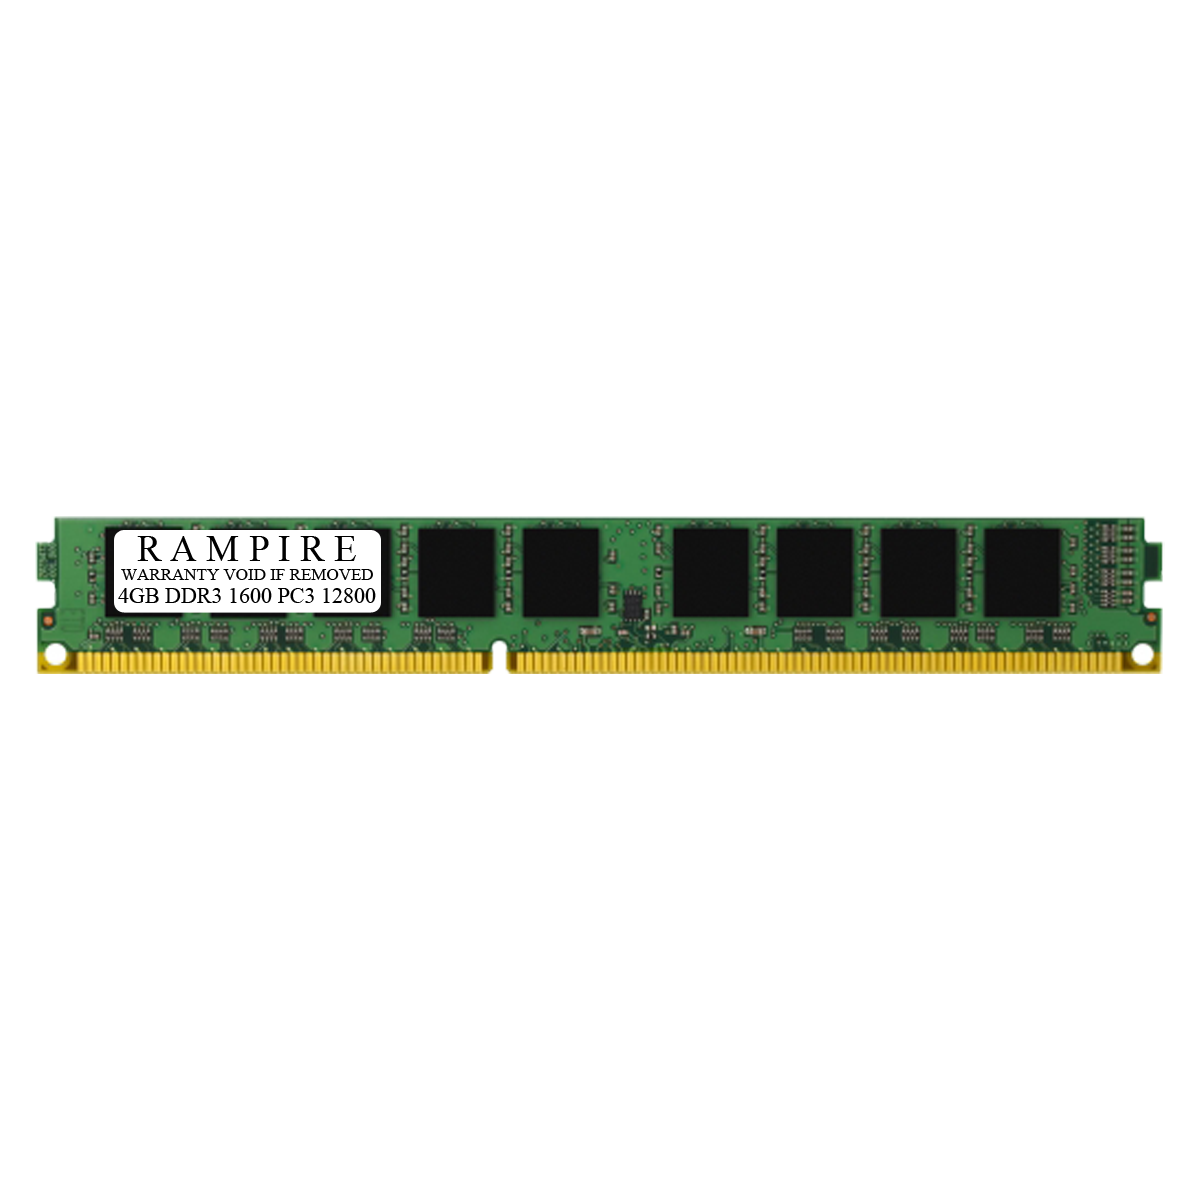 RAMPIRE 4GB DDR3 1600 (PC3 12800) 240-Pin SDRAM 2Rx8 VLP (Low Profile) 1.35V ECC Unregistered Server Memory